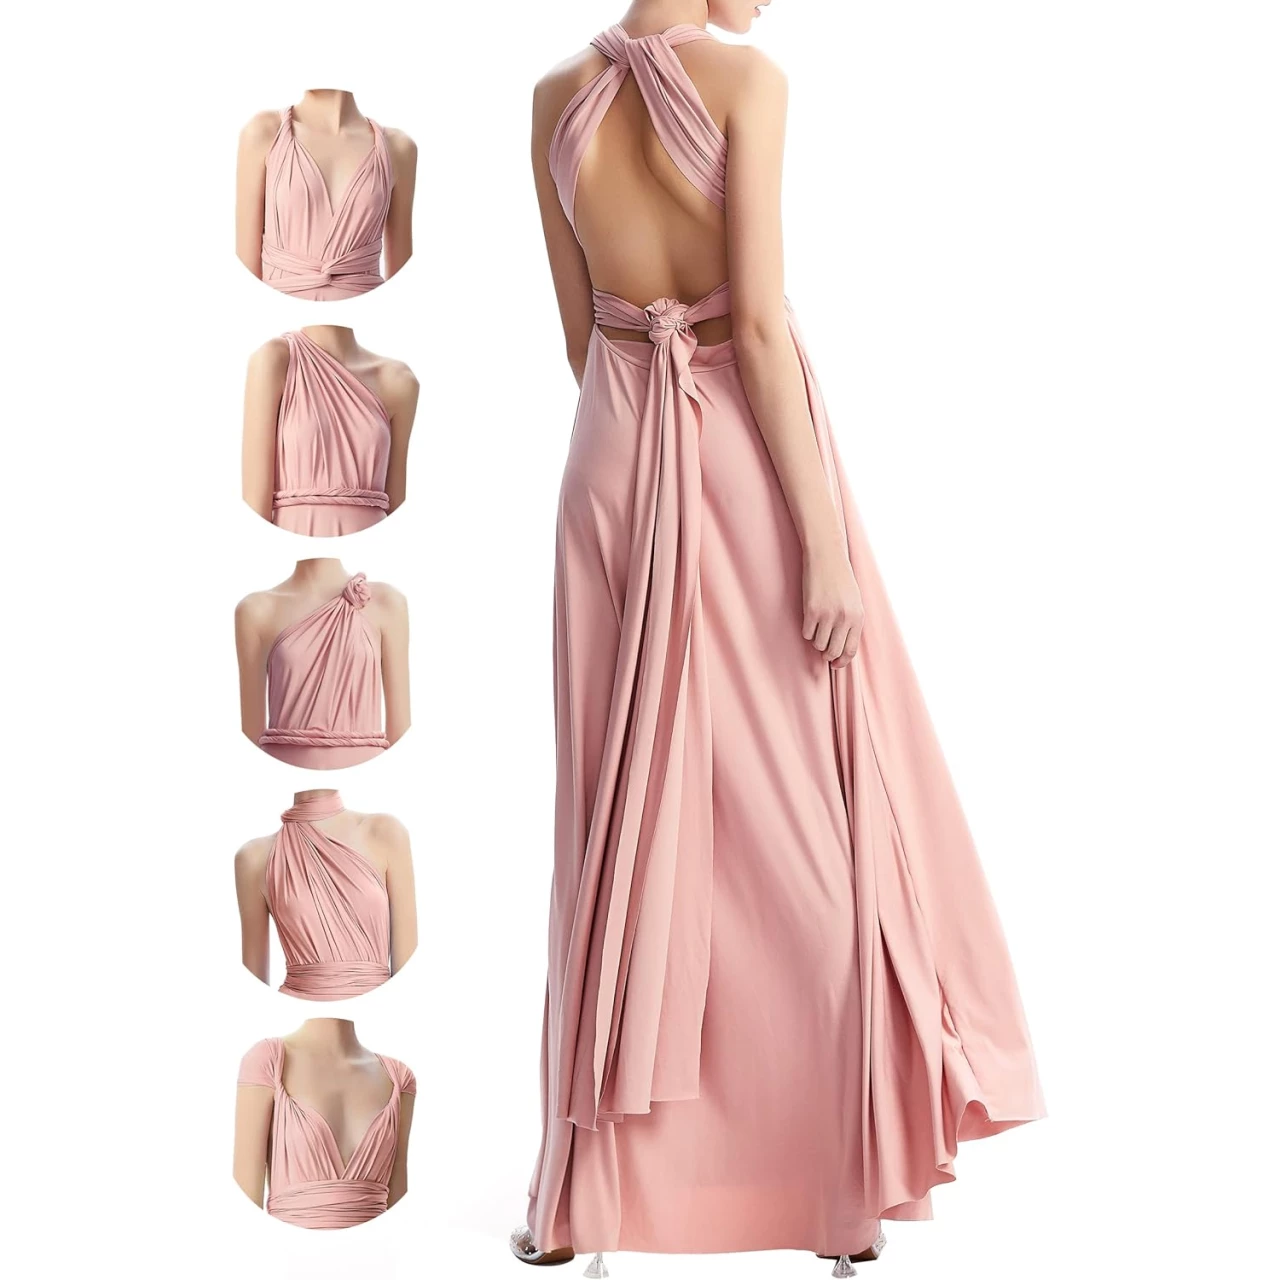 Infinity Dresses for Bridesmaids,Wedding Guest Dresses for Women,Plus Size Wrap Dress Long Maxi Convertible Multiway Dresses